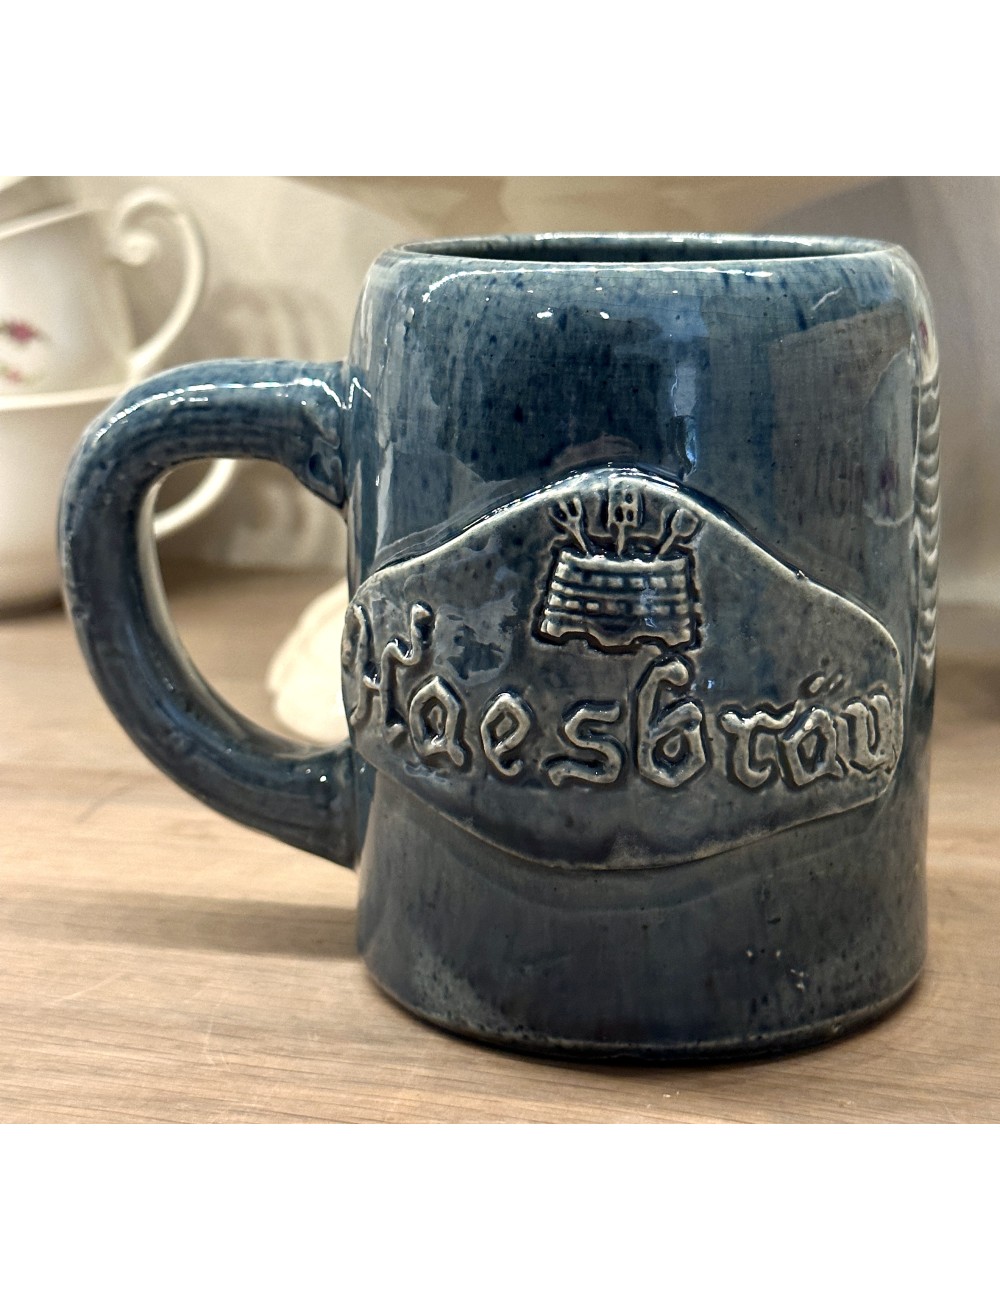 Beer mug - handmade by A. Noseda of Kuurne - marked inside bottom - blue model